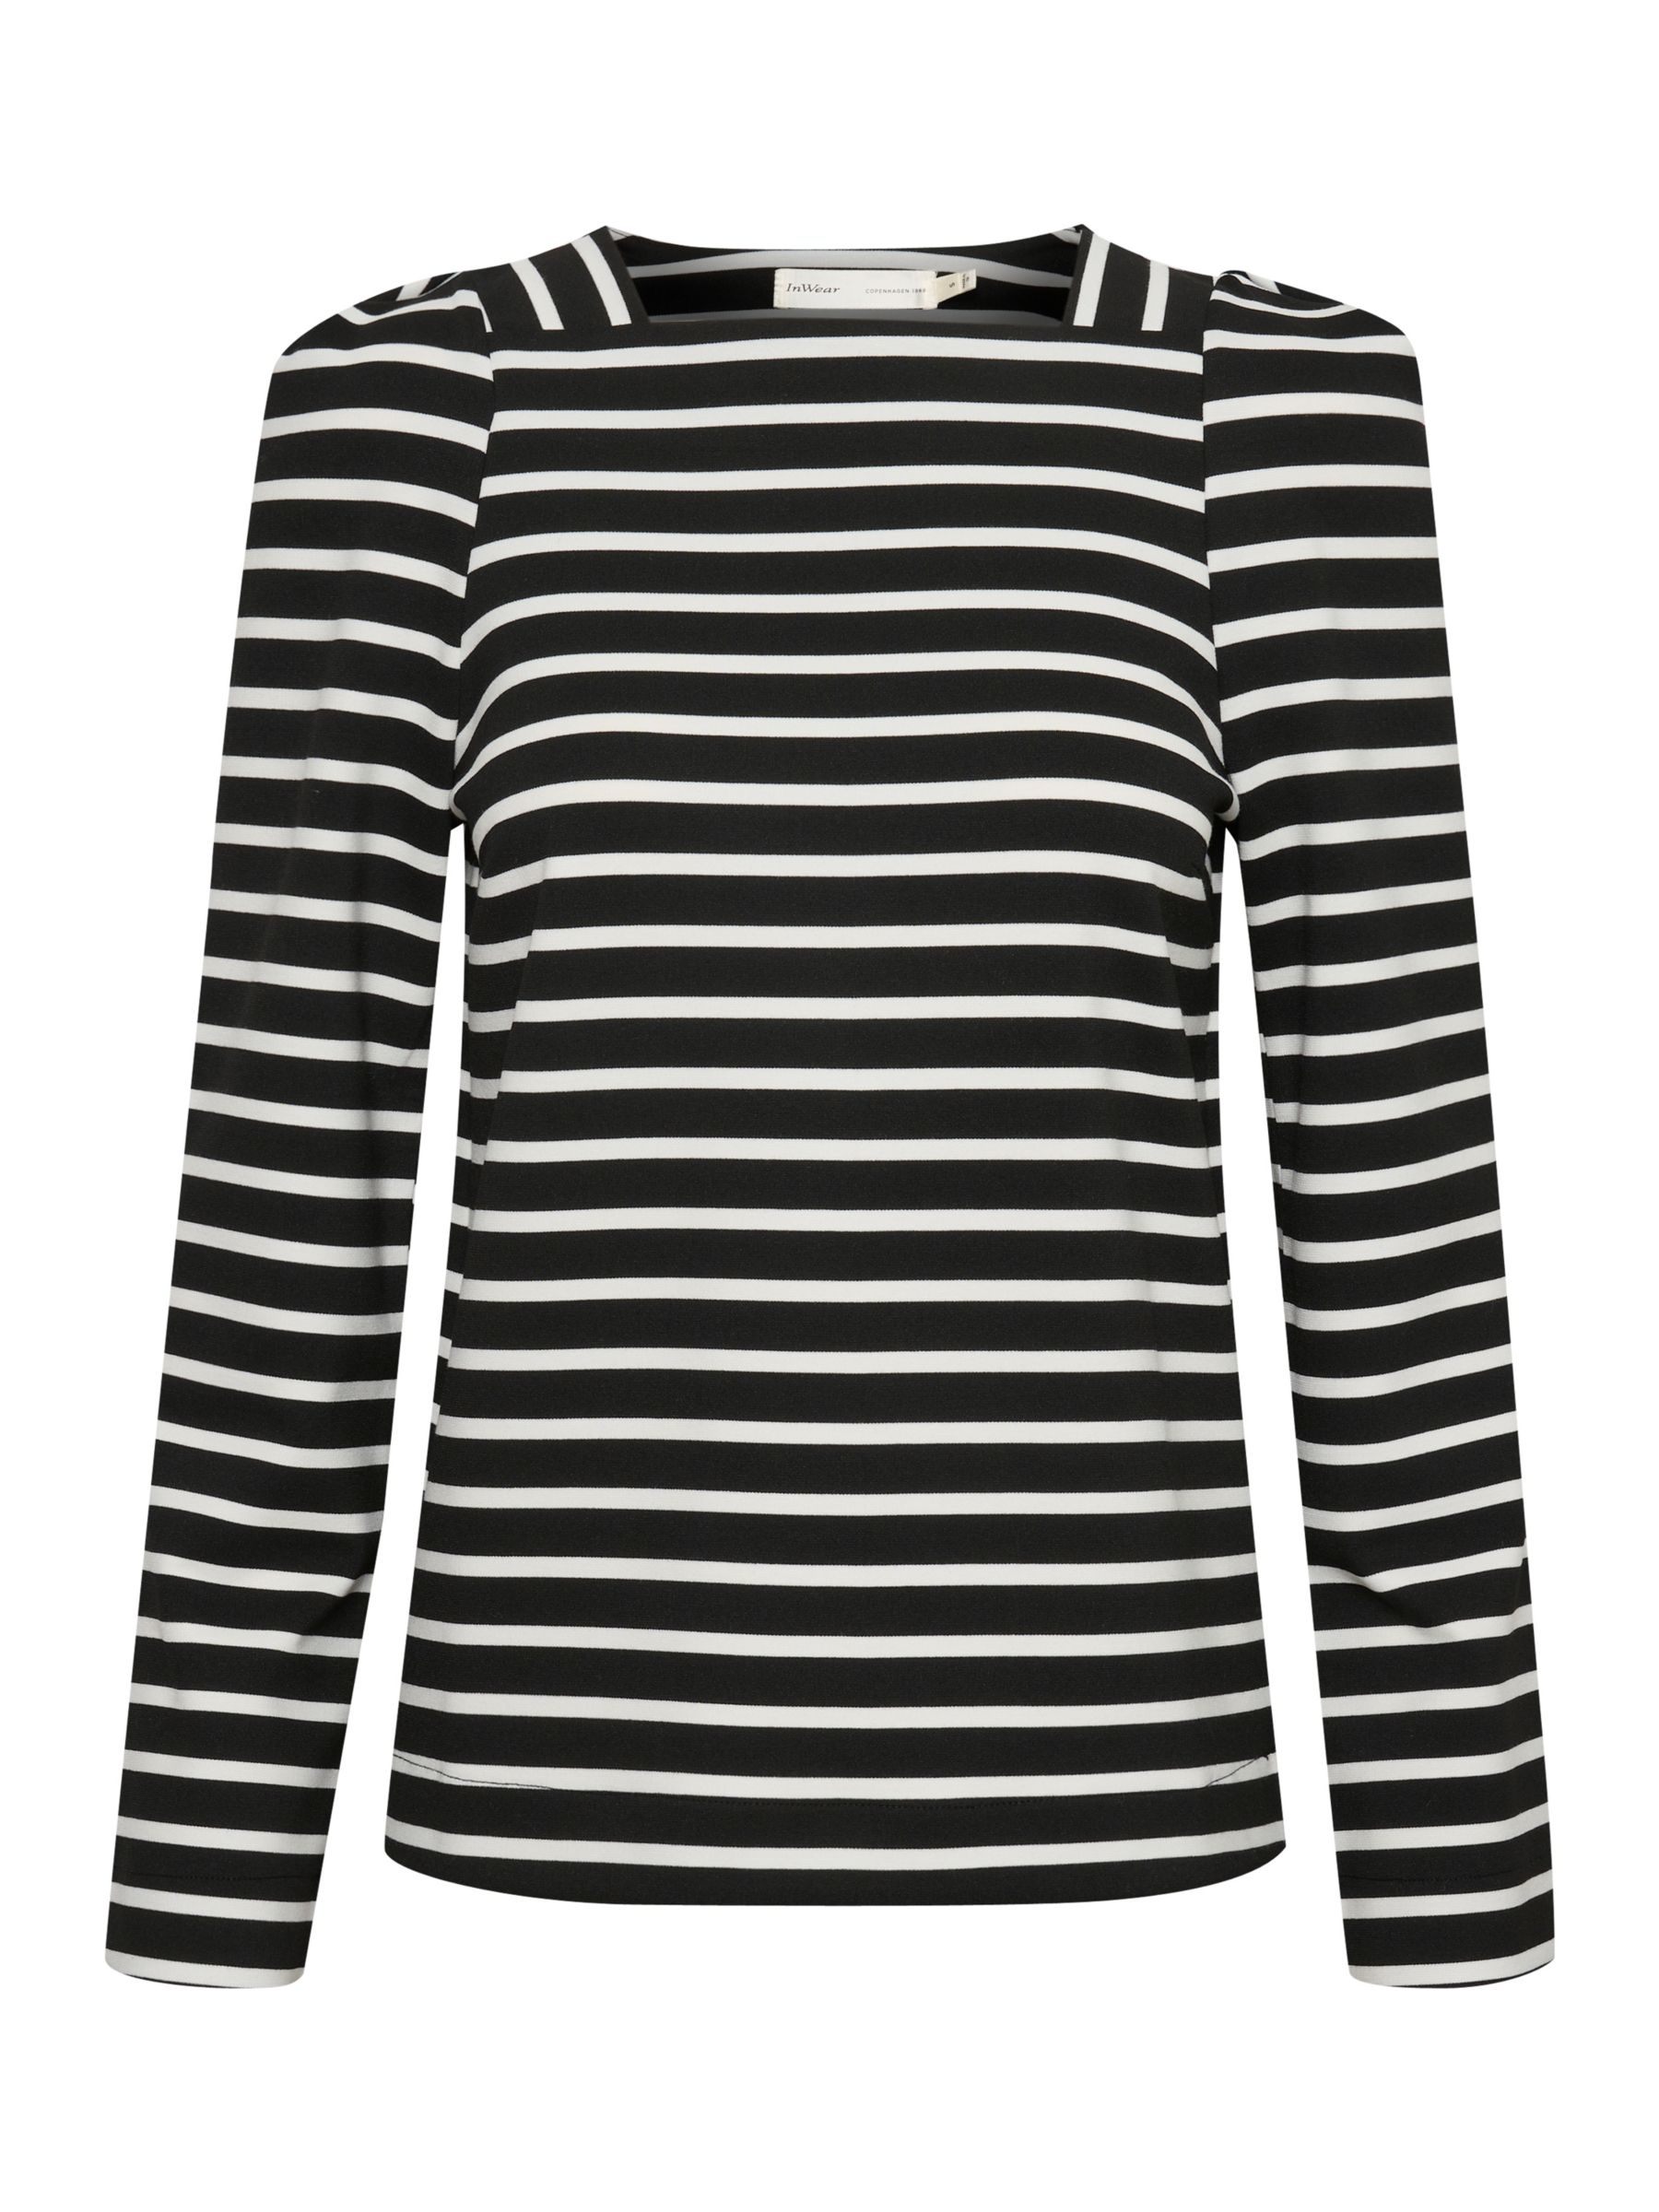 InWear Ruby Stripe Top, Black/White at John Lewis & Partners